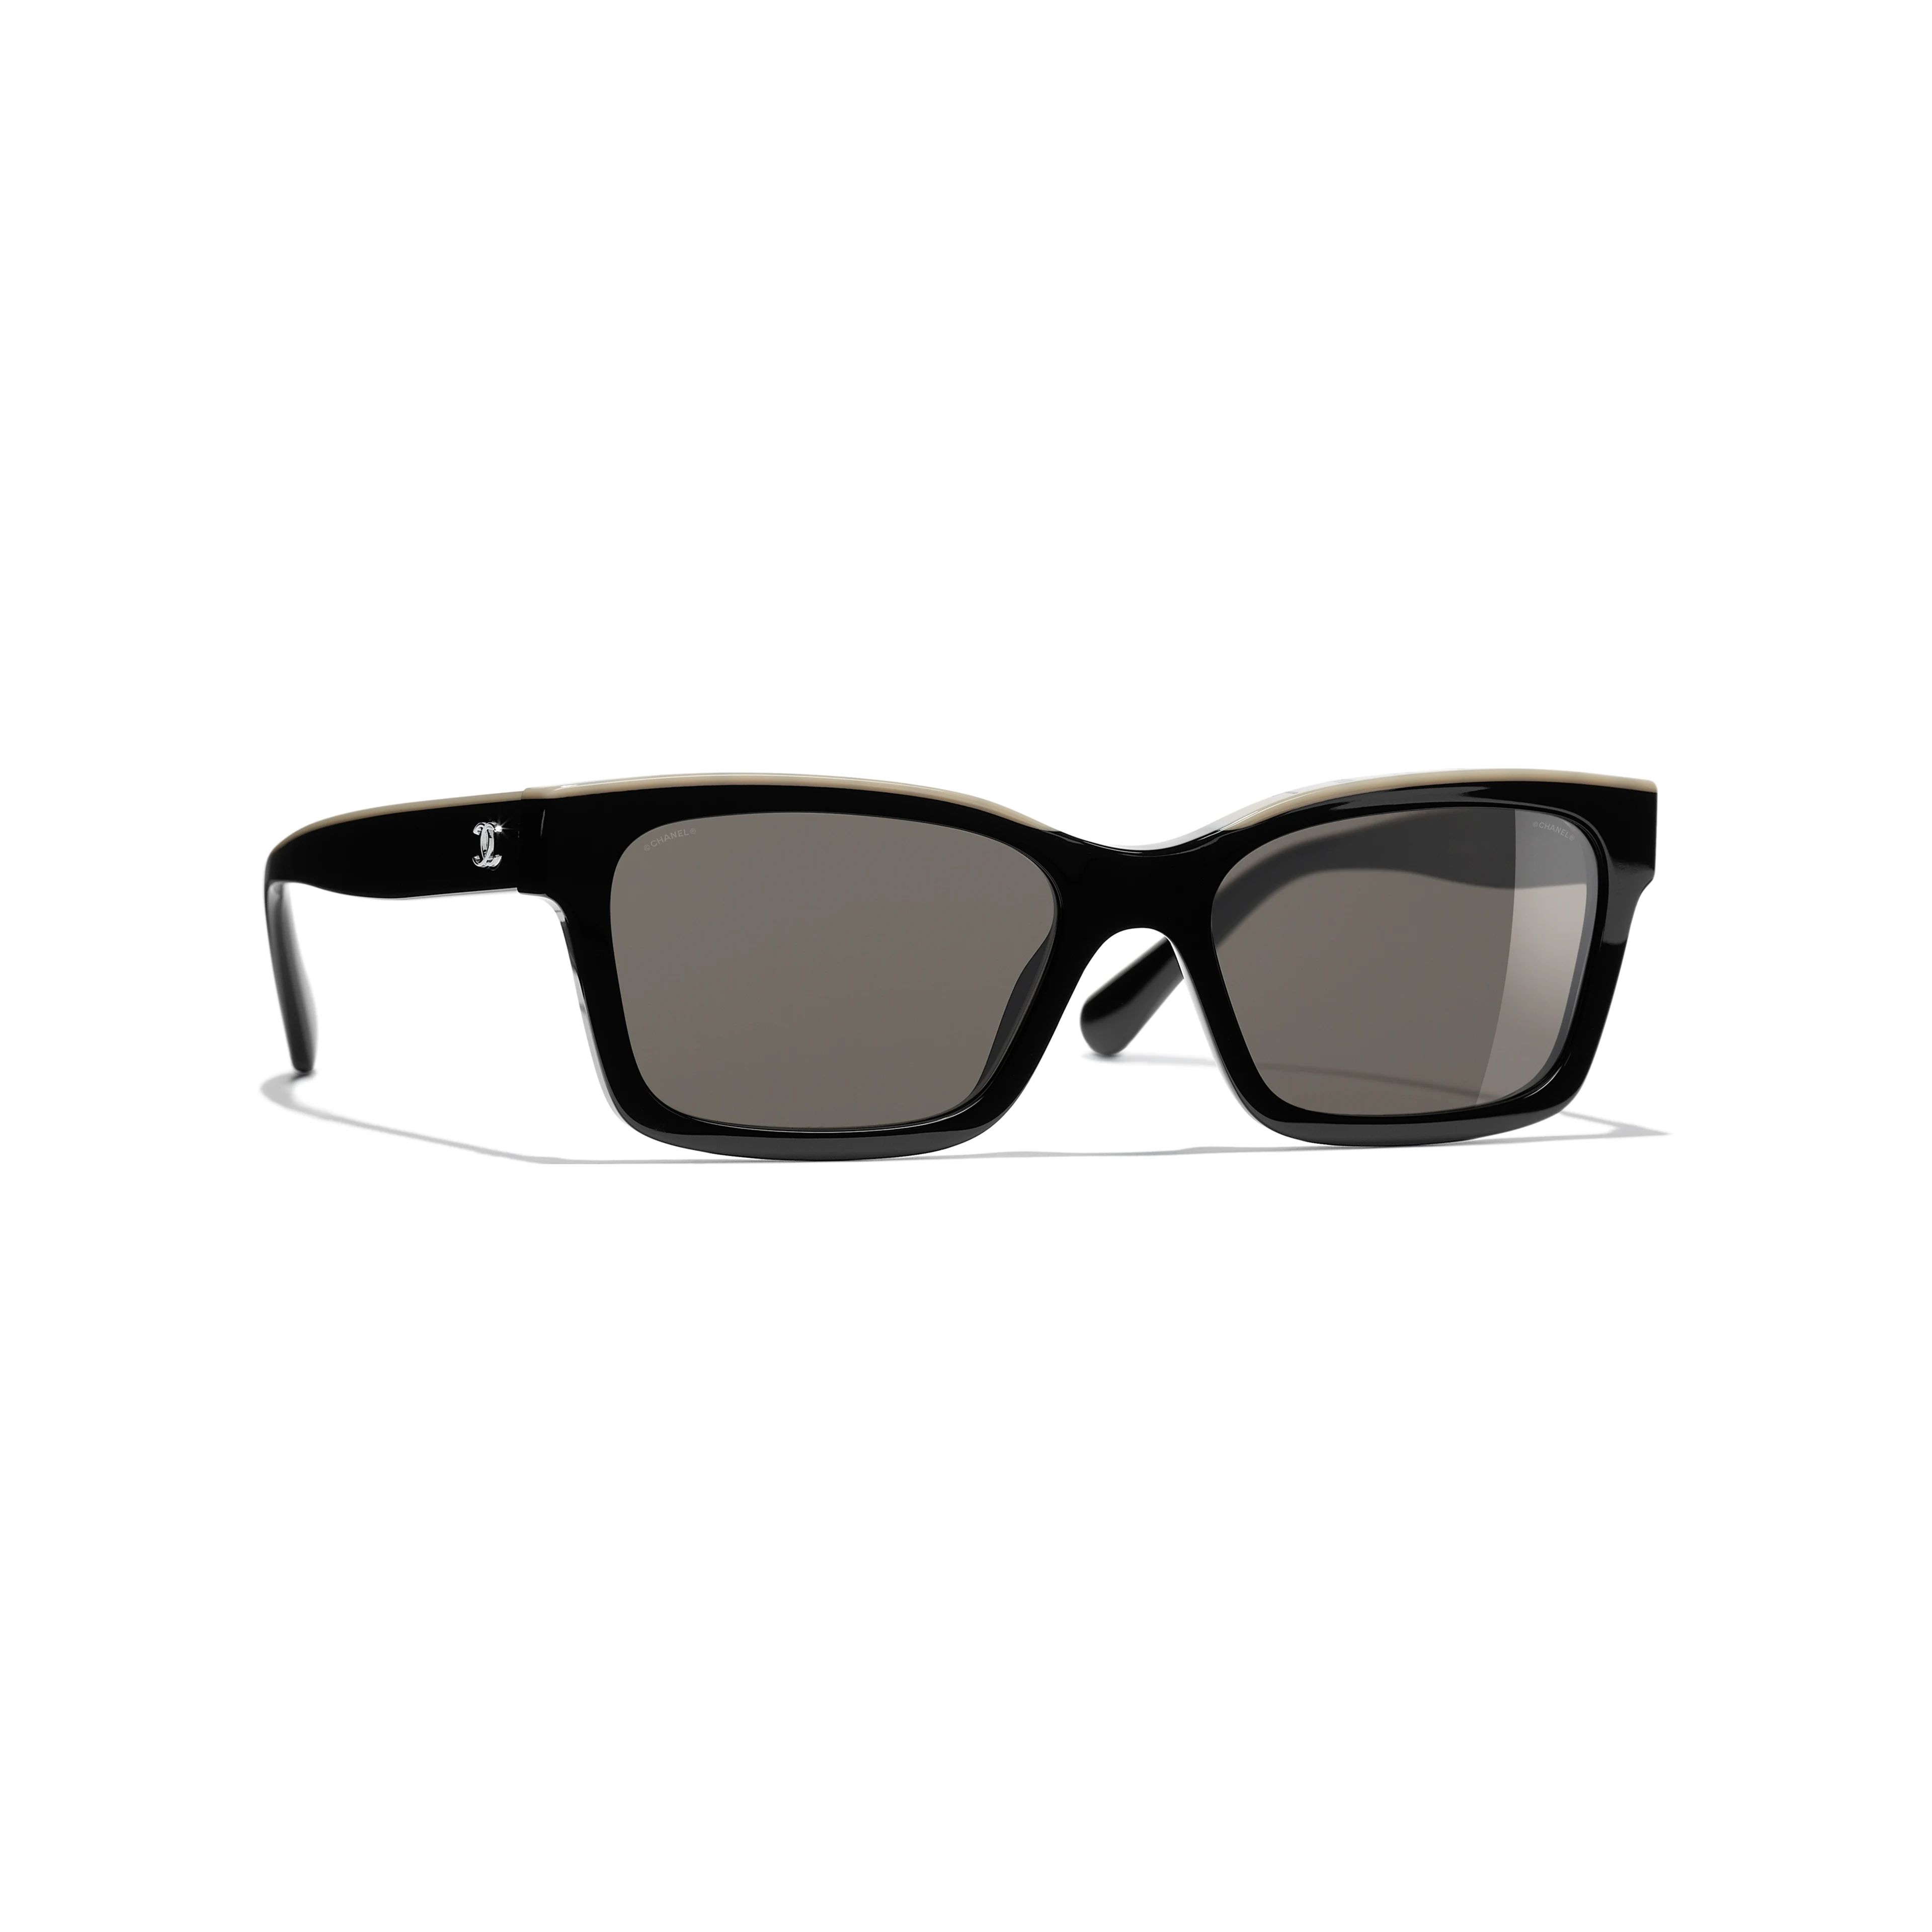 Sunglasses: Square Sunglasses, acetate — Fashion | CHANEL | Chanel, Inc. (US)